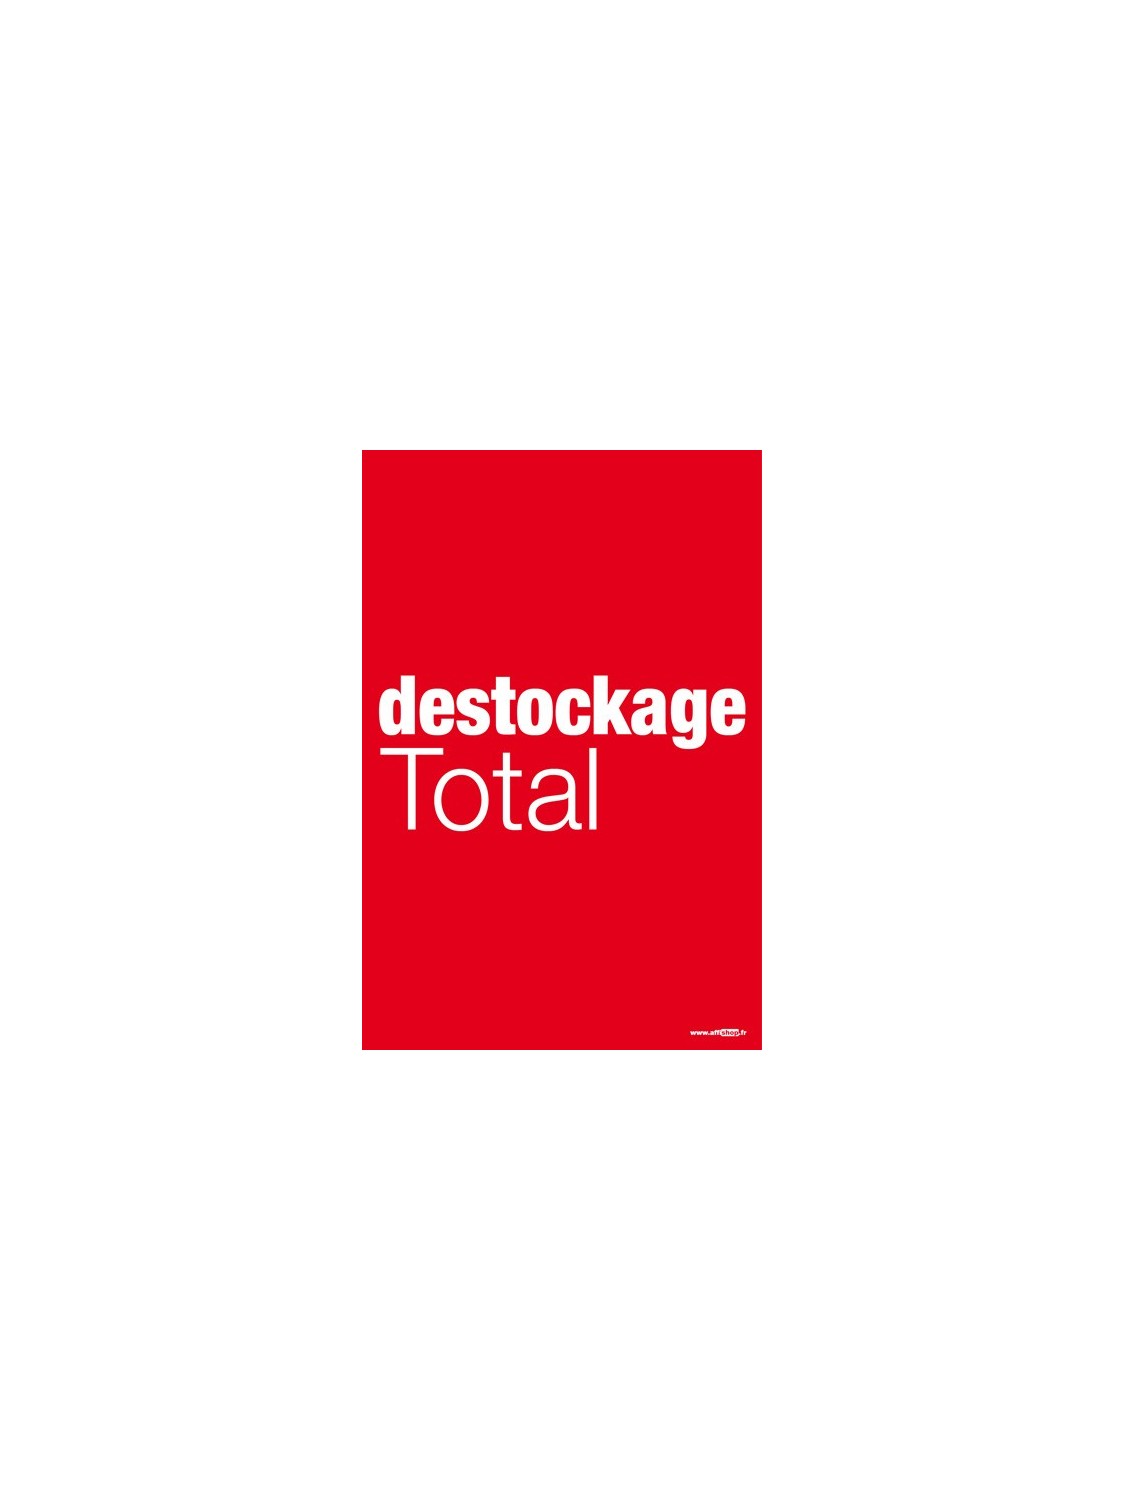 Affiche "destockage total"